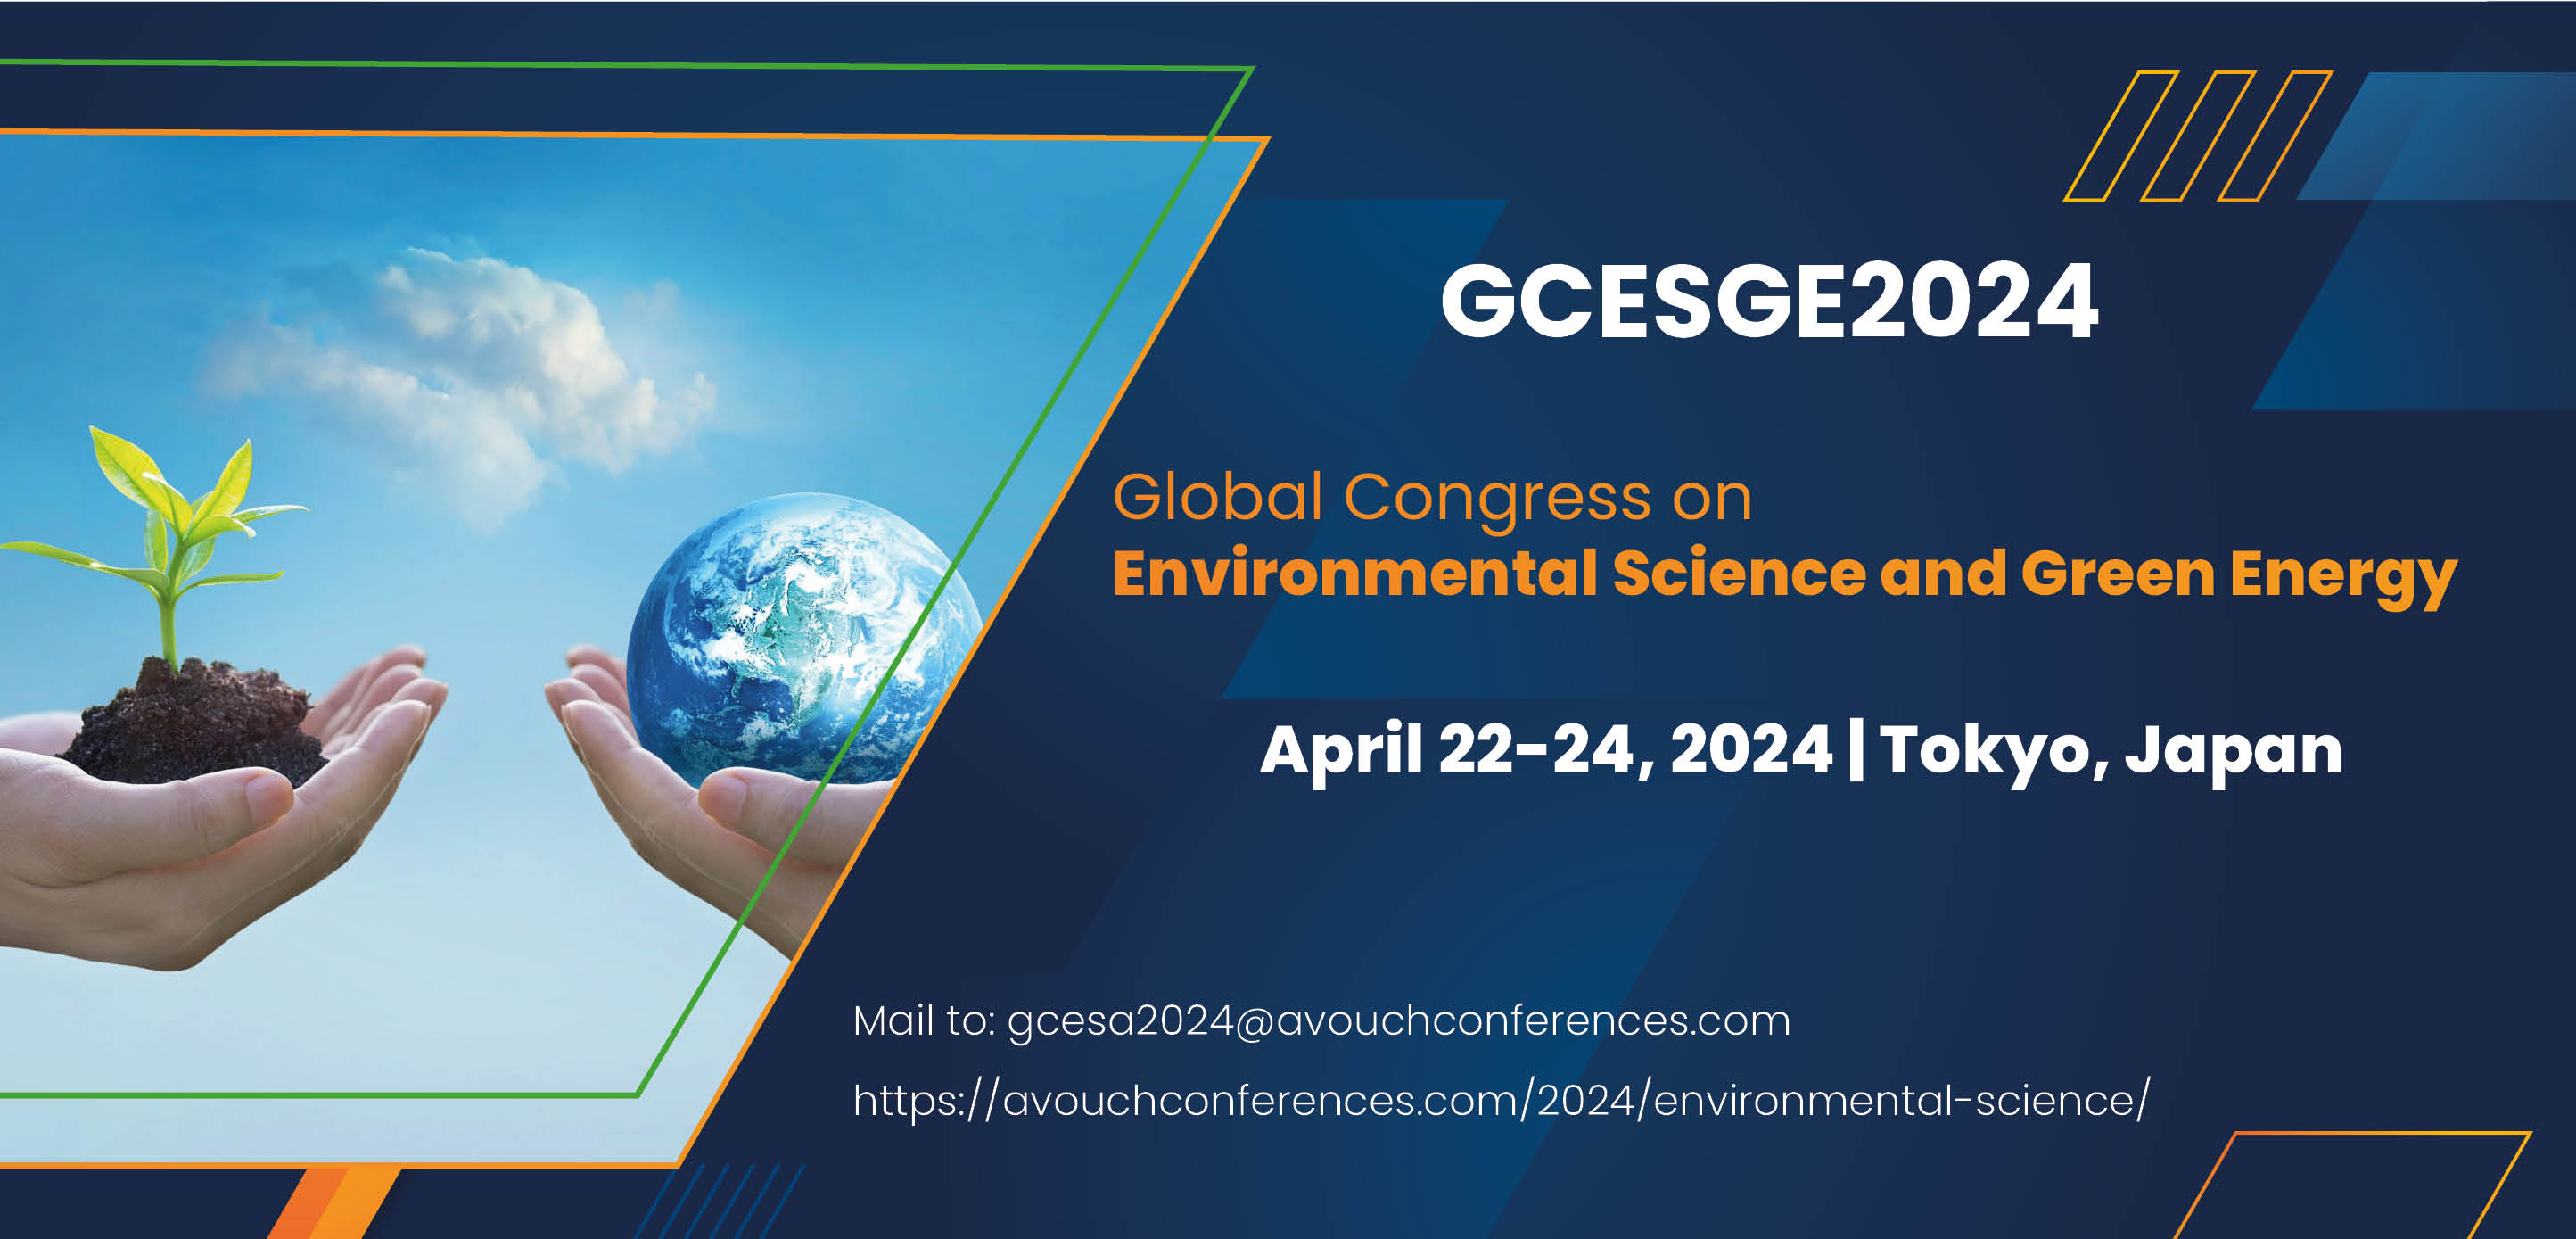 GCESA2024 Environmental Science Conferences 2024